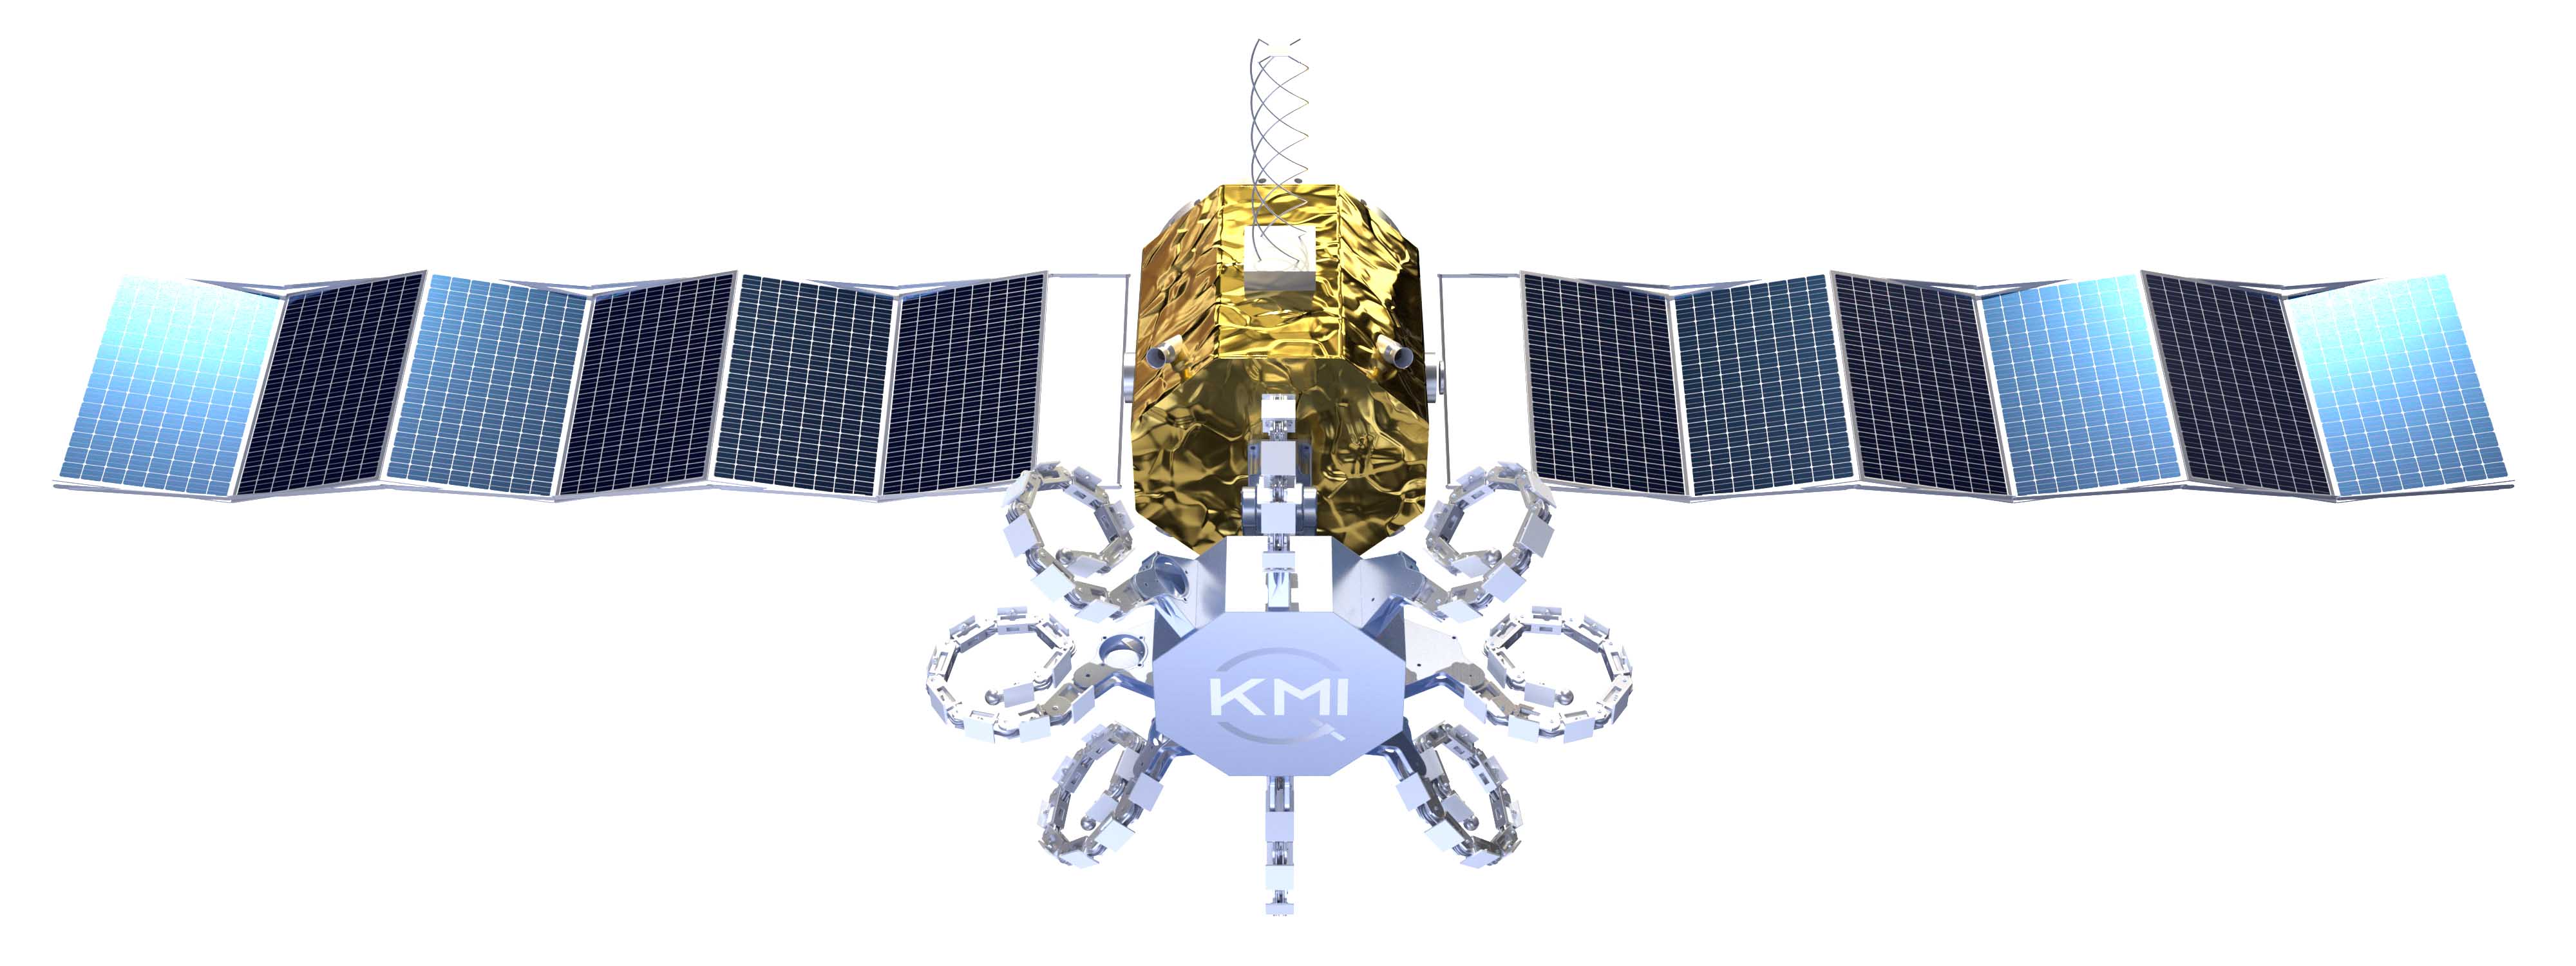 Illustration of satelite